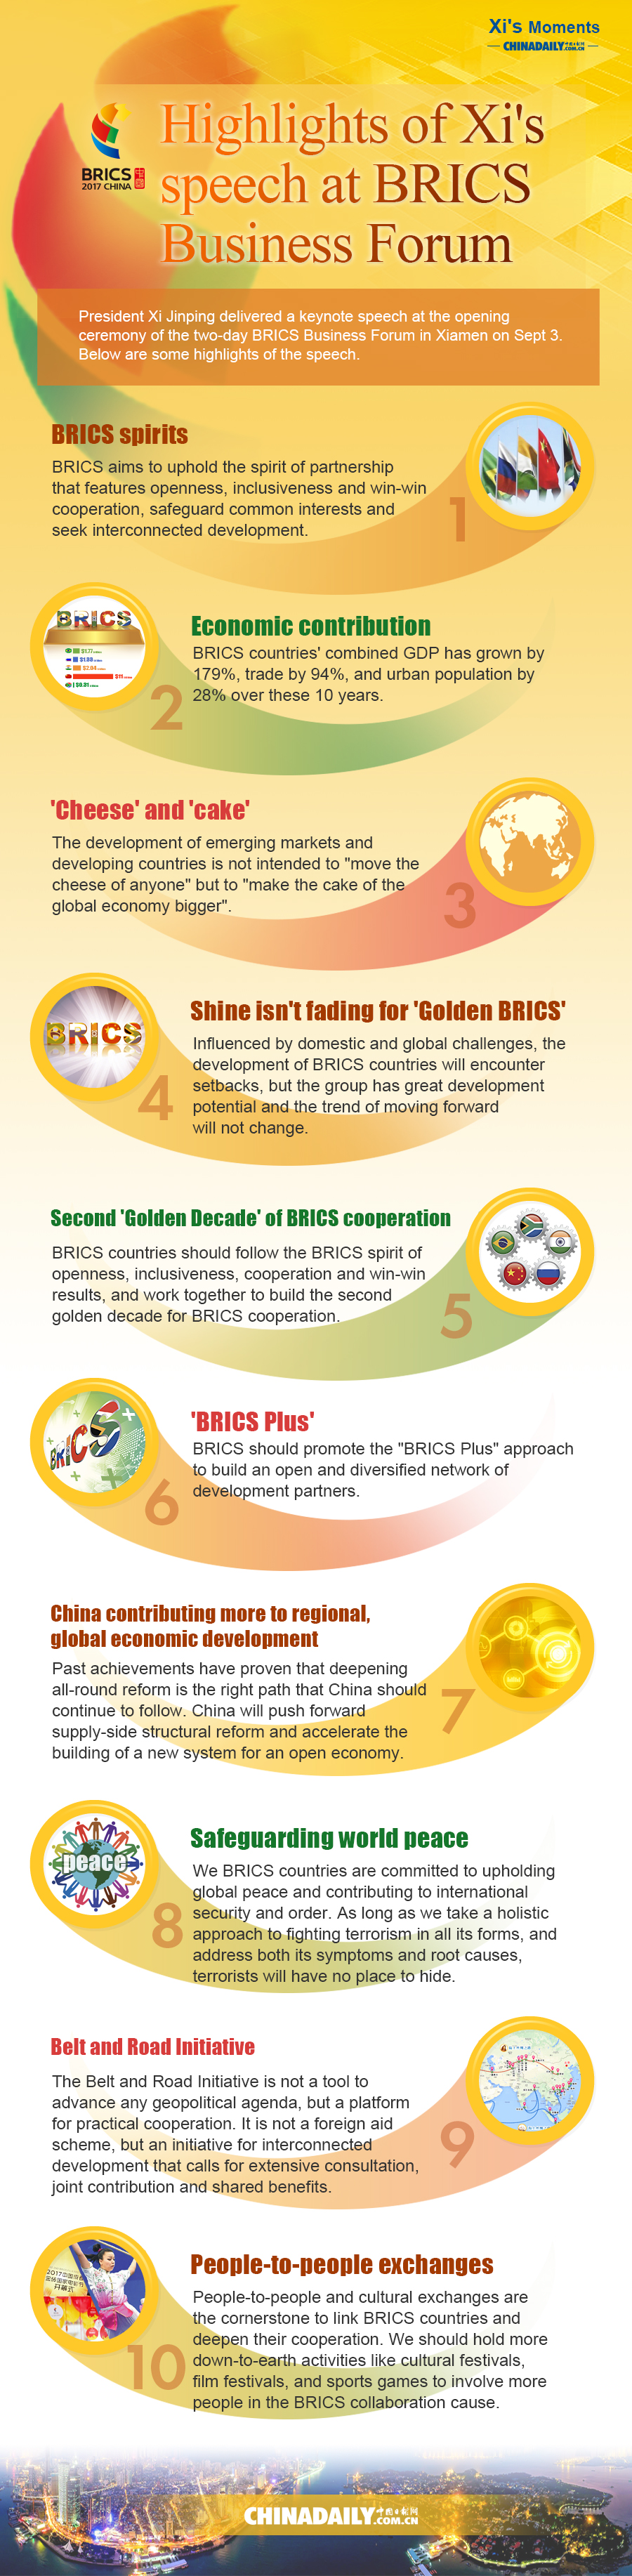 Highlights of Xi's speech at BRICS Business Forum